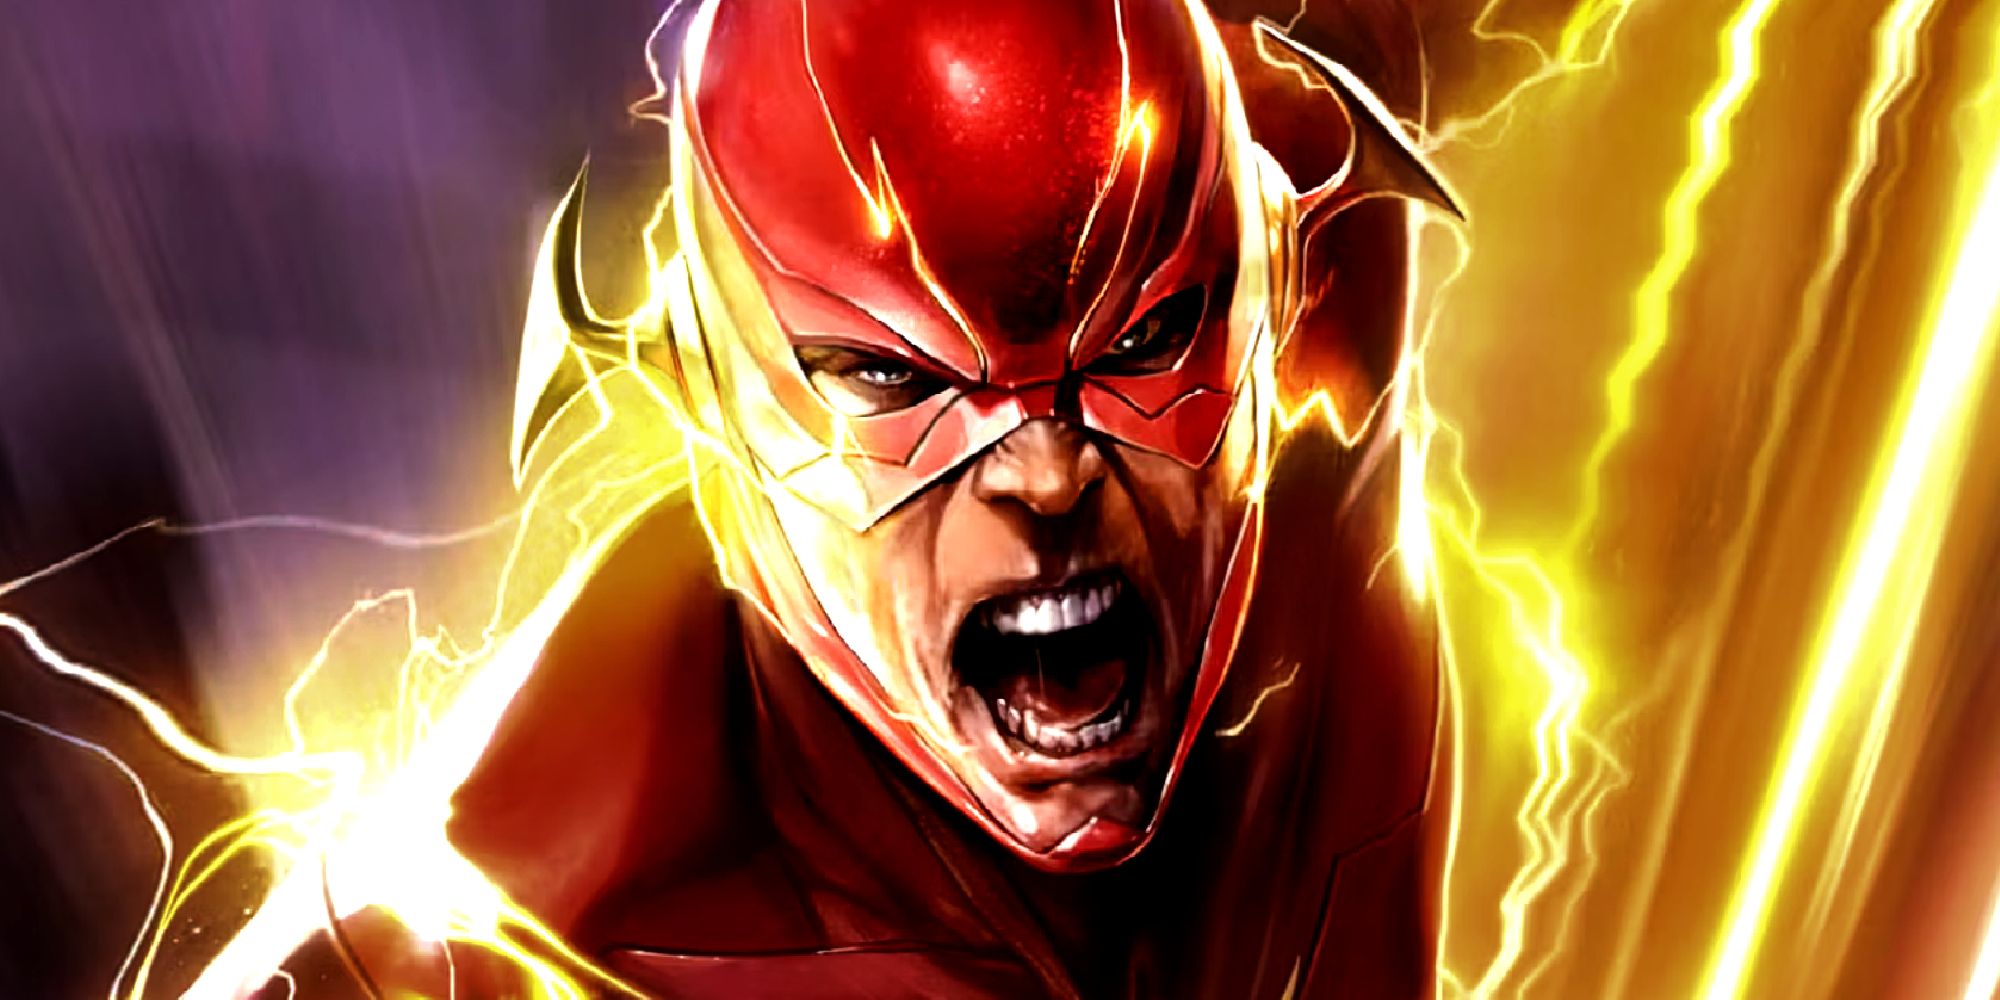 Barry Allen a.k.a. The Flash Running in DC Comics